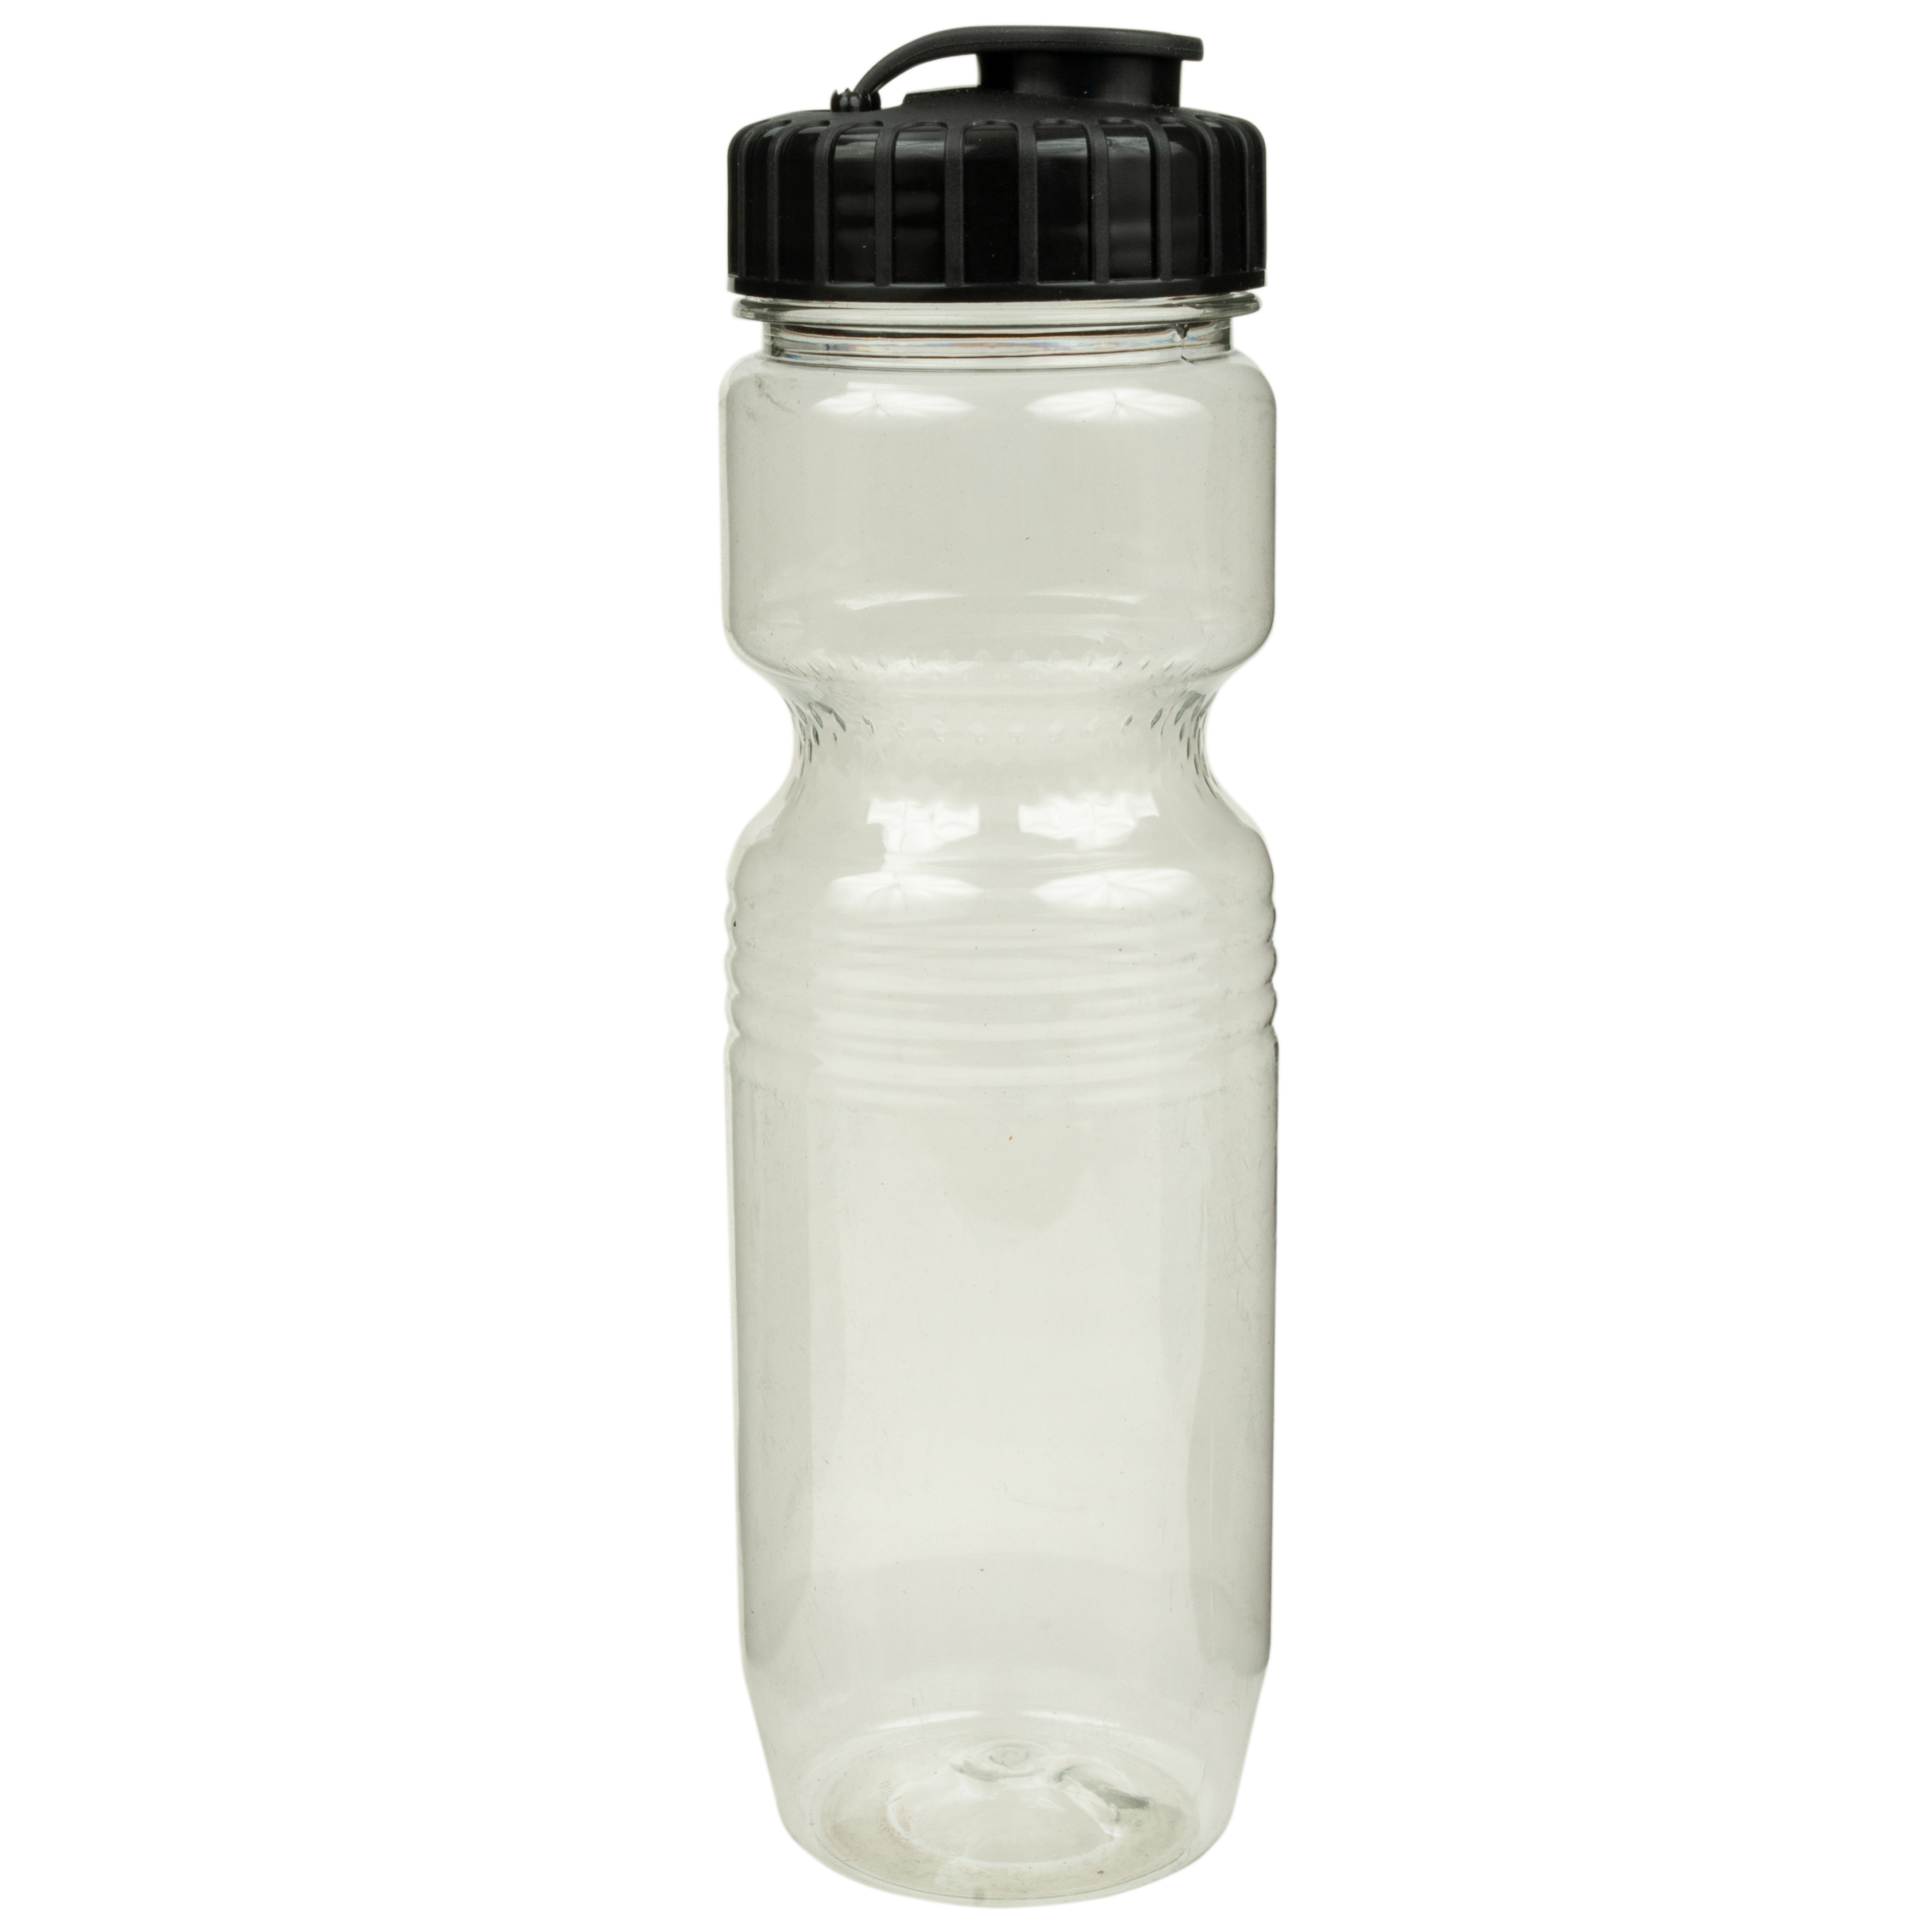 Flip Top Plastic Bottle with Measurement Markings, Clear, HYDRATION